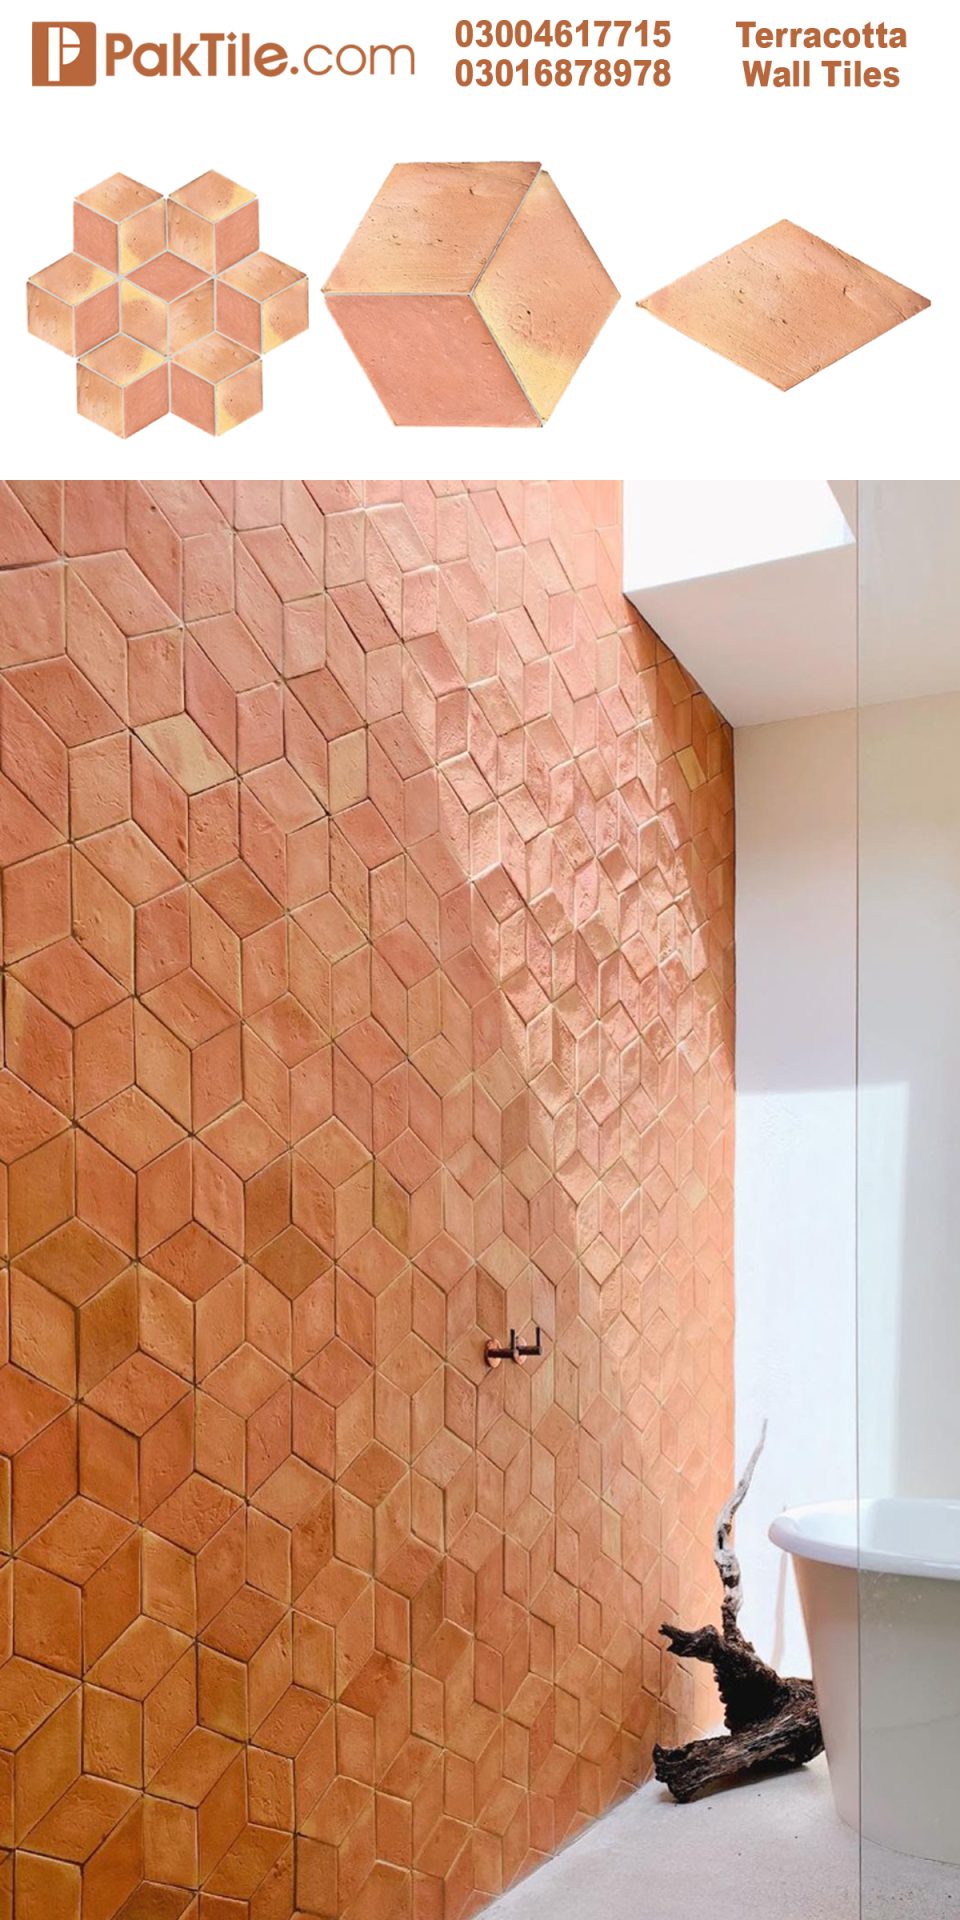 Pak Clay Terracotta Wall Tiles Design in Pakistan